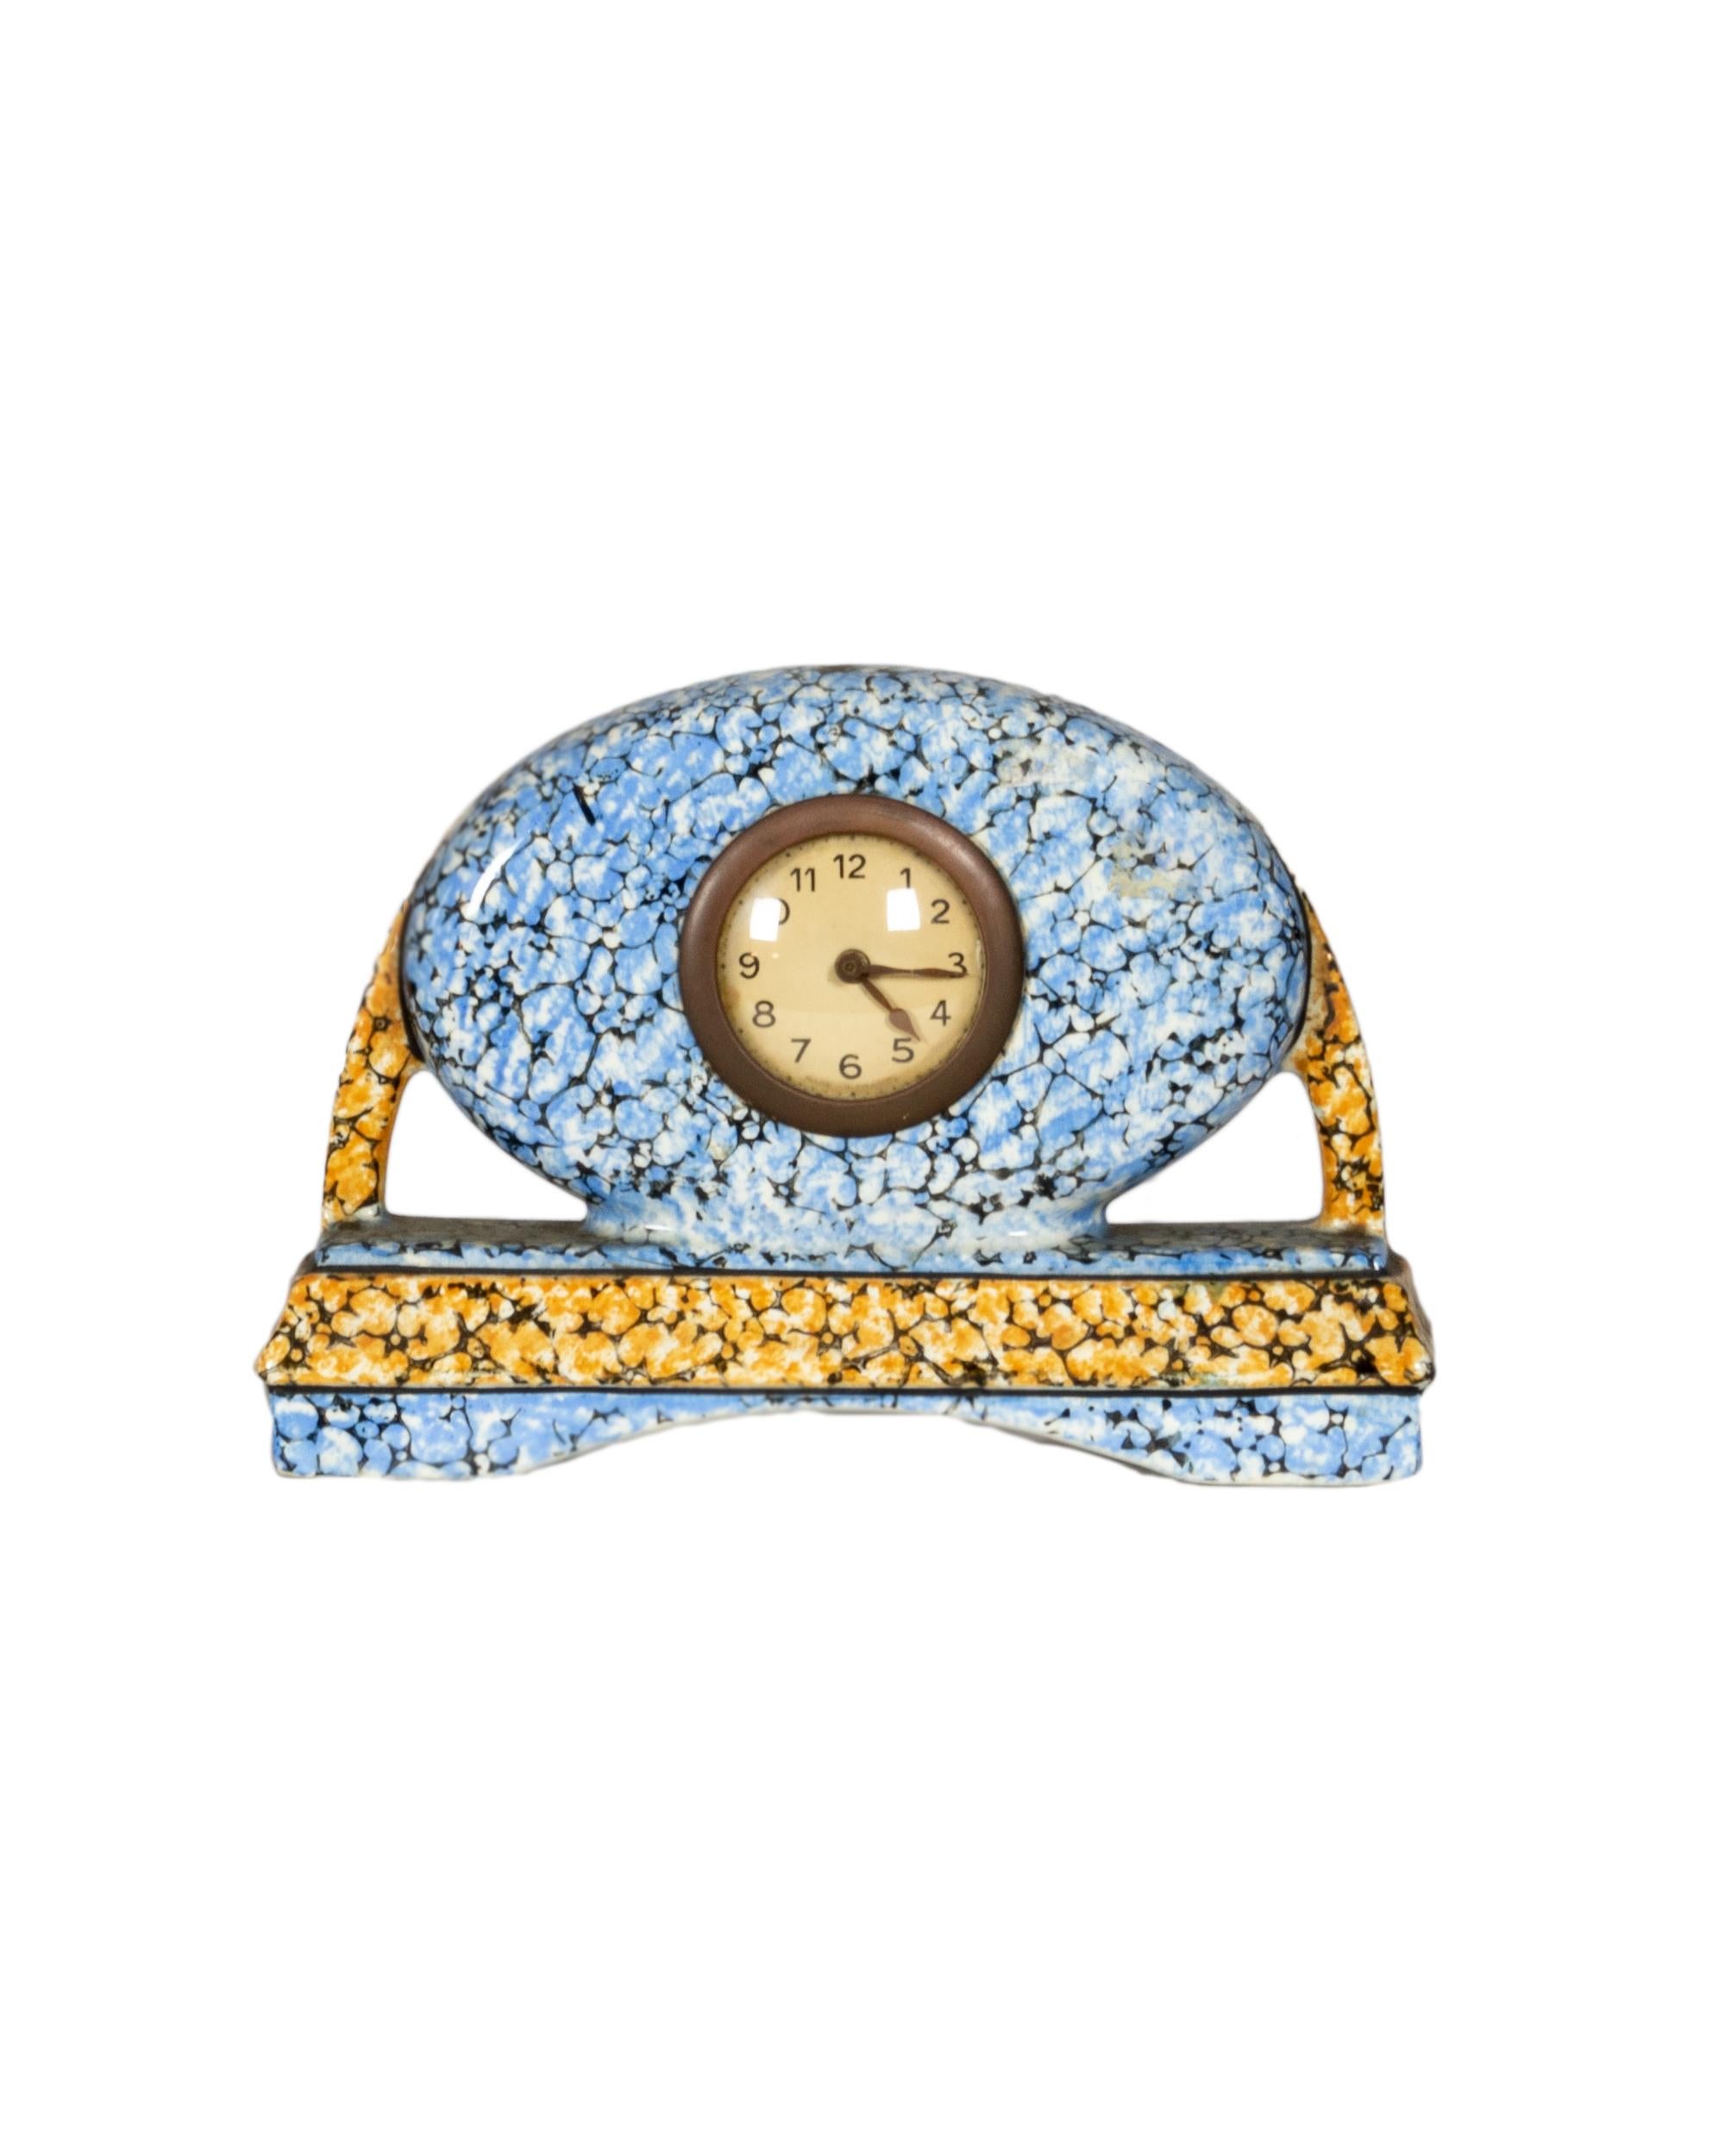 Belgian Art Deco Mantle Clock Set by Majolique Wasmuel For Sale